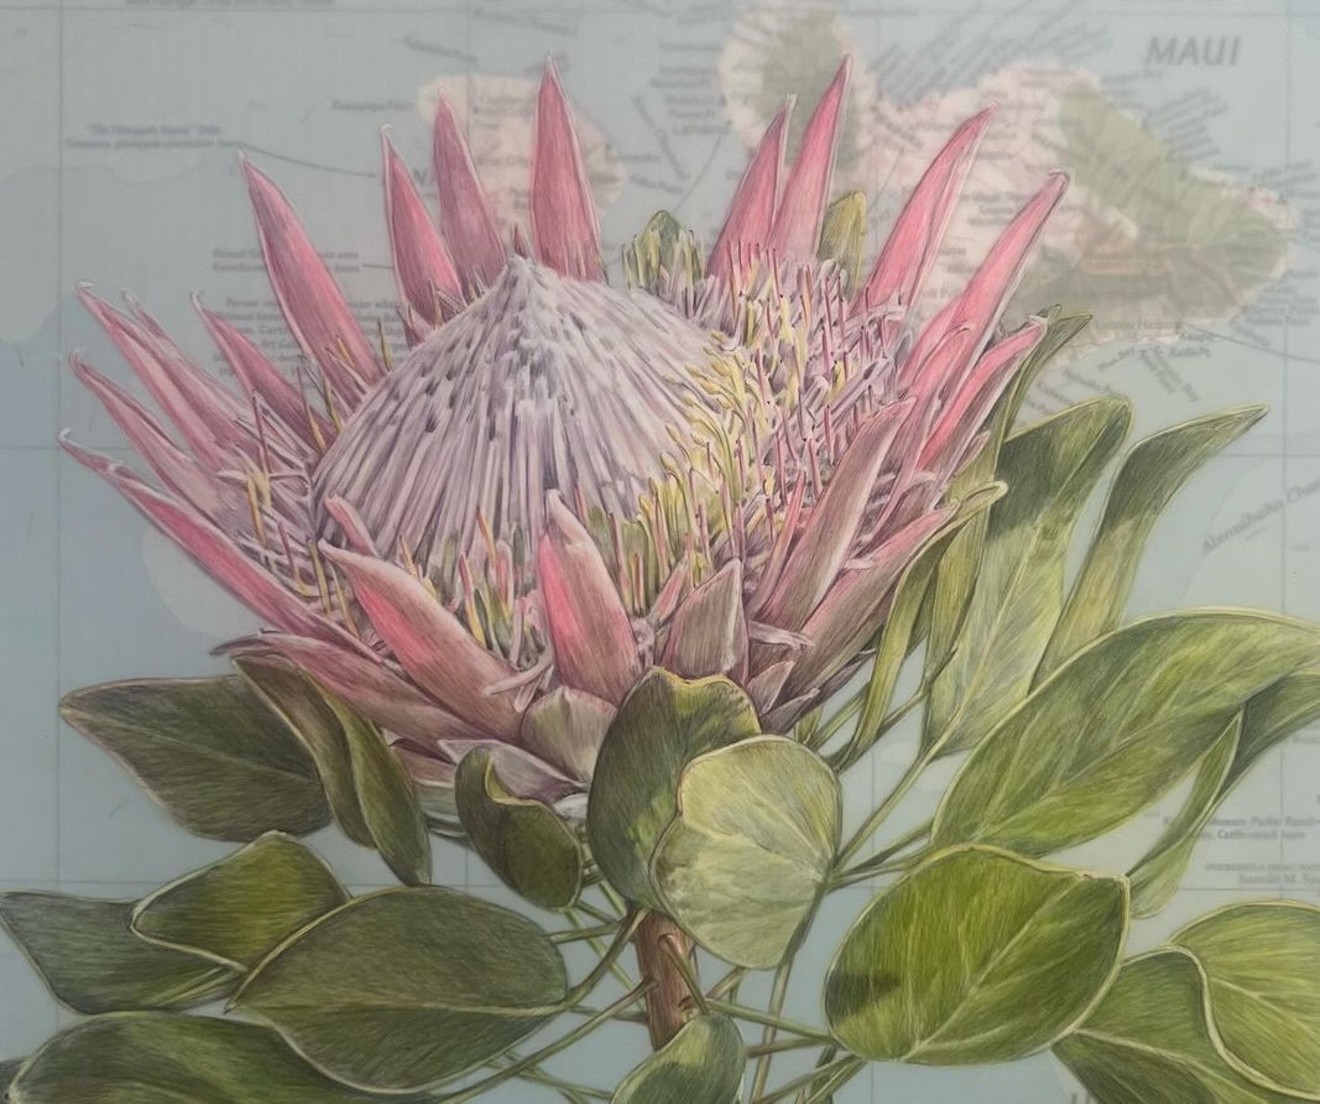 Susan Rubin, “Protea, Hawaii" (detail), 2023, colored pencil and map.